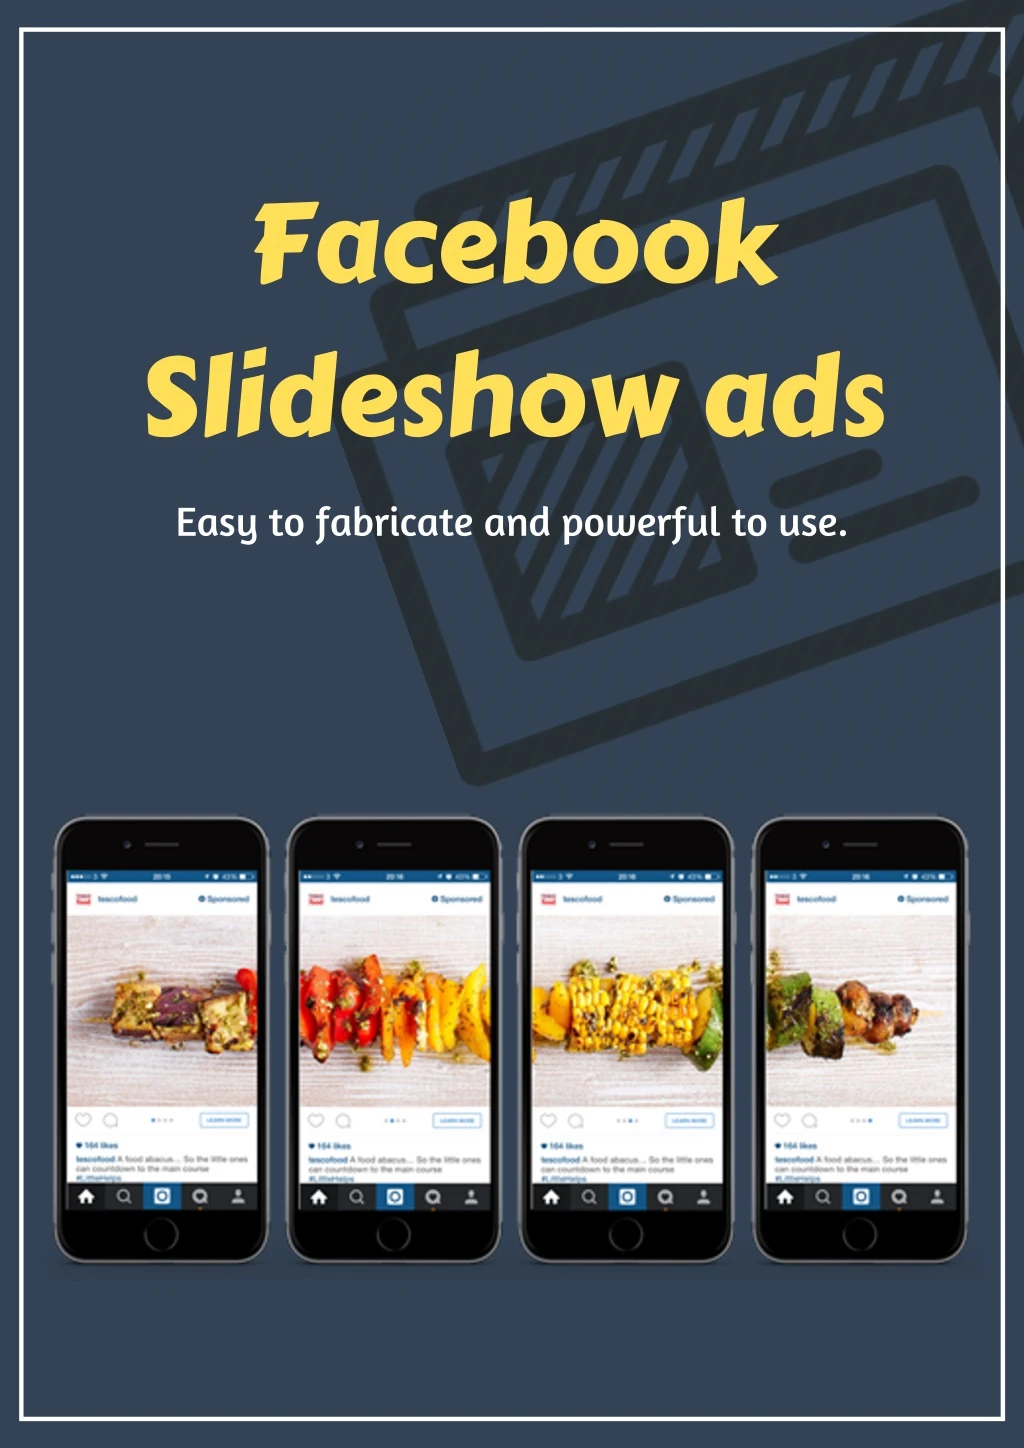 facebook slideshow ads